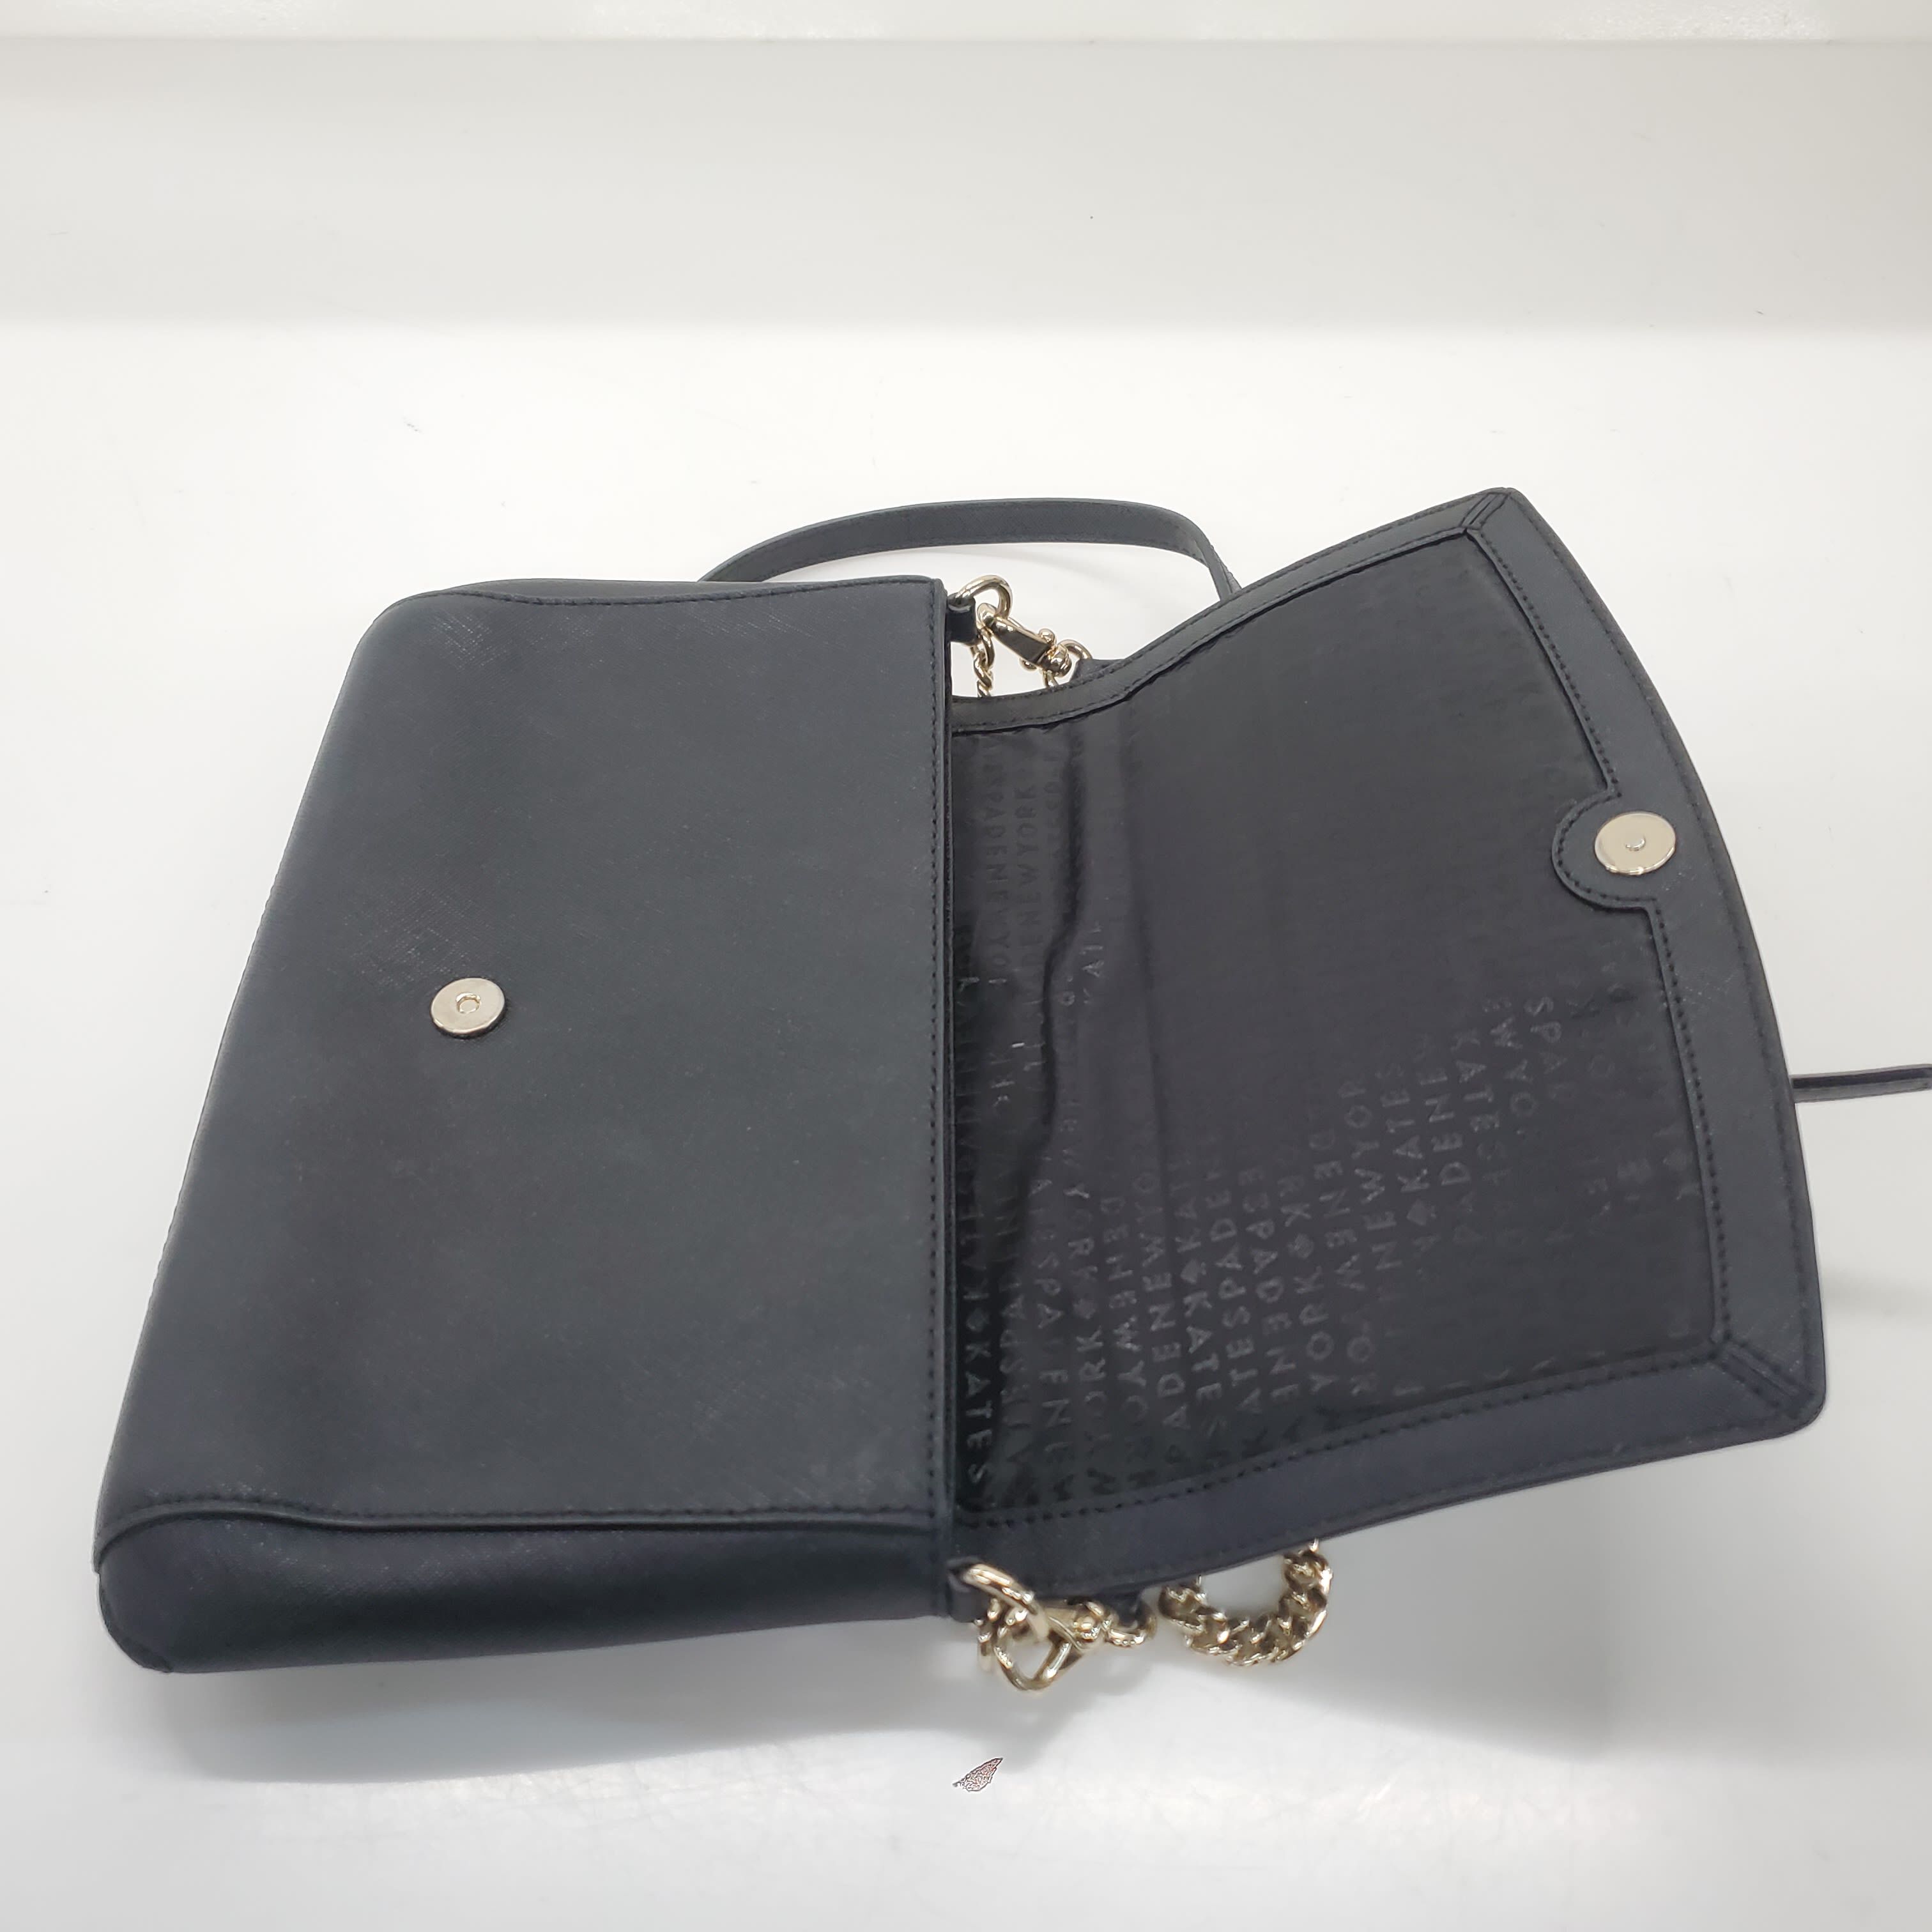 Buy DAISY STAR Women's Medium Tote Bag | Shoulder Bag Hand Held Bag With  Long Strap Ladies Purse Handbag Set Of 1. (Brown) at Amazon.in